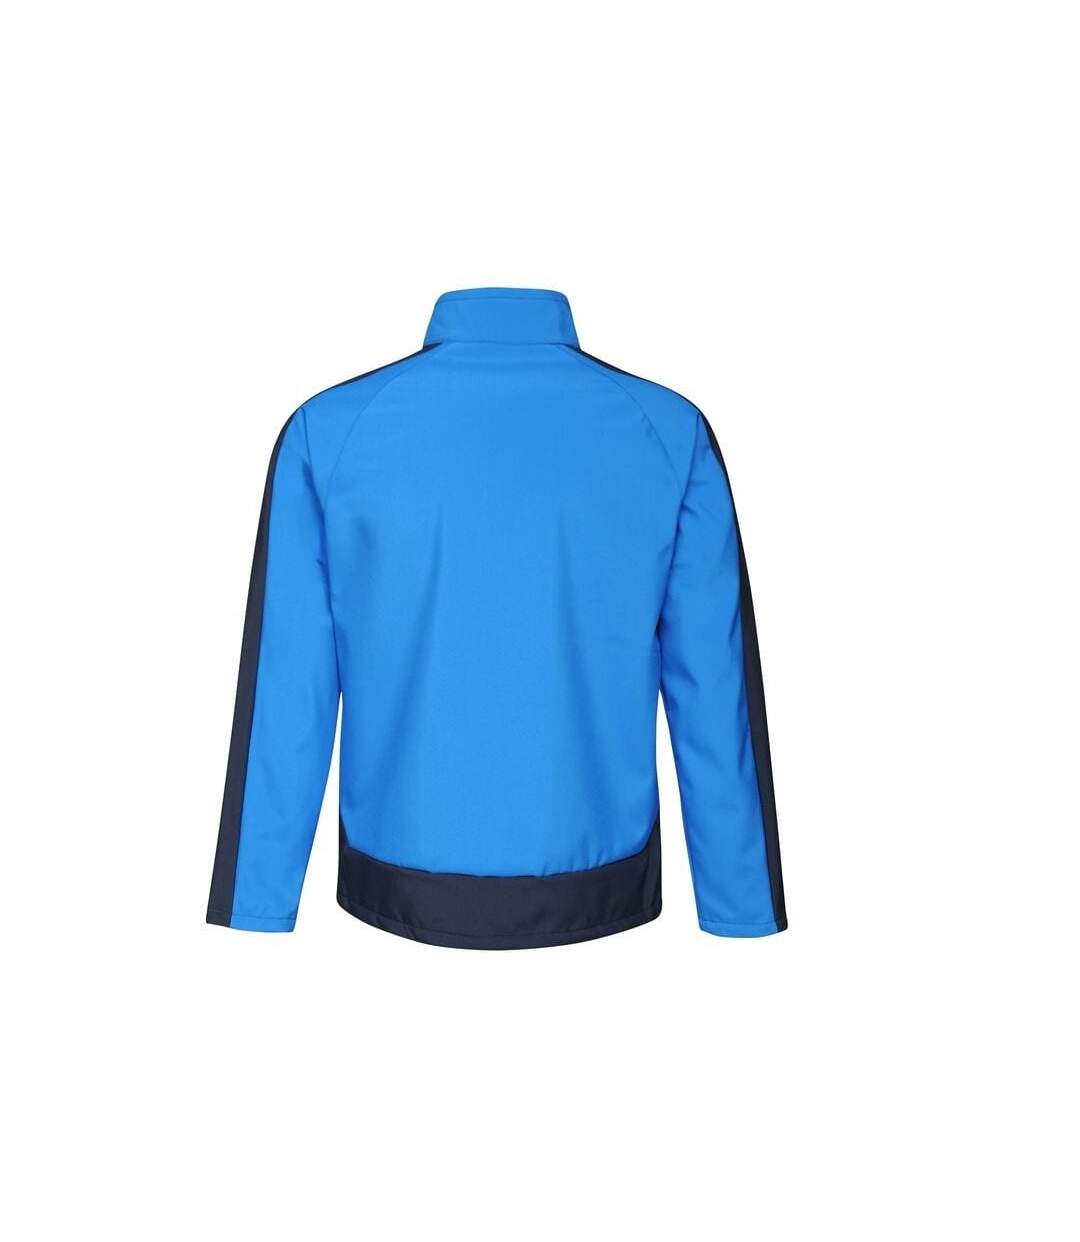 Regatta - Veste Softshell CONTRAST - Homme (Bleu roi / bleu marine) - UTPC3318